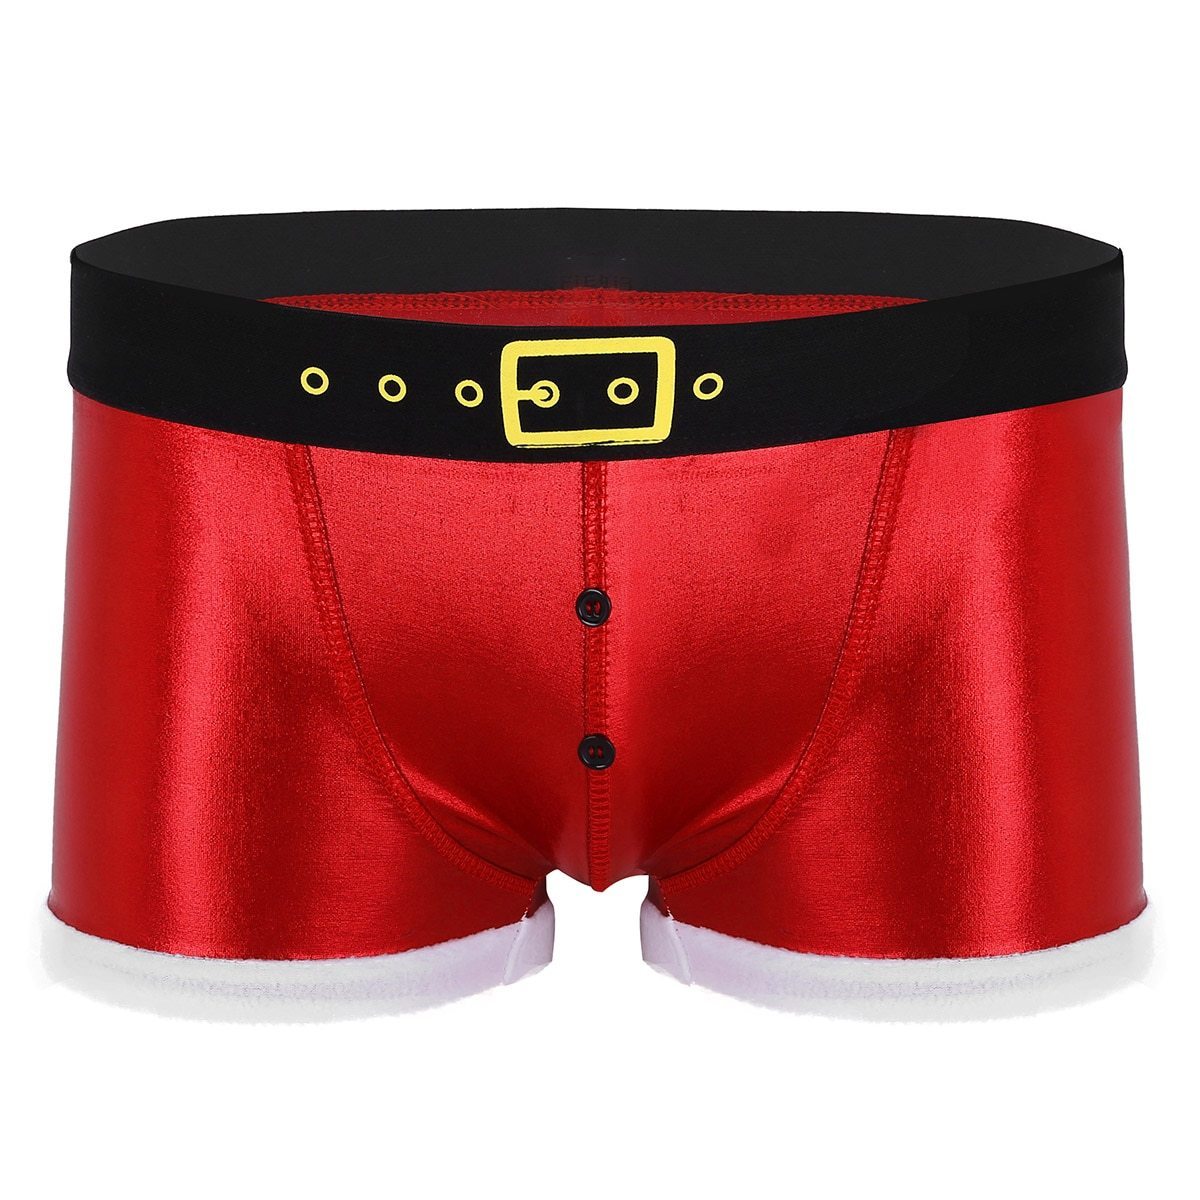 SALE - XMAS GIFT - Mens Glitter Christmas Santa Boxer Shorts with Printed Belt Details